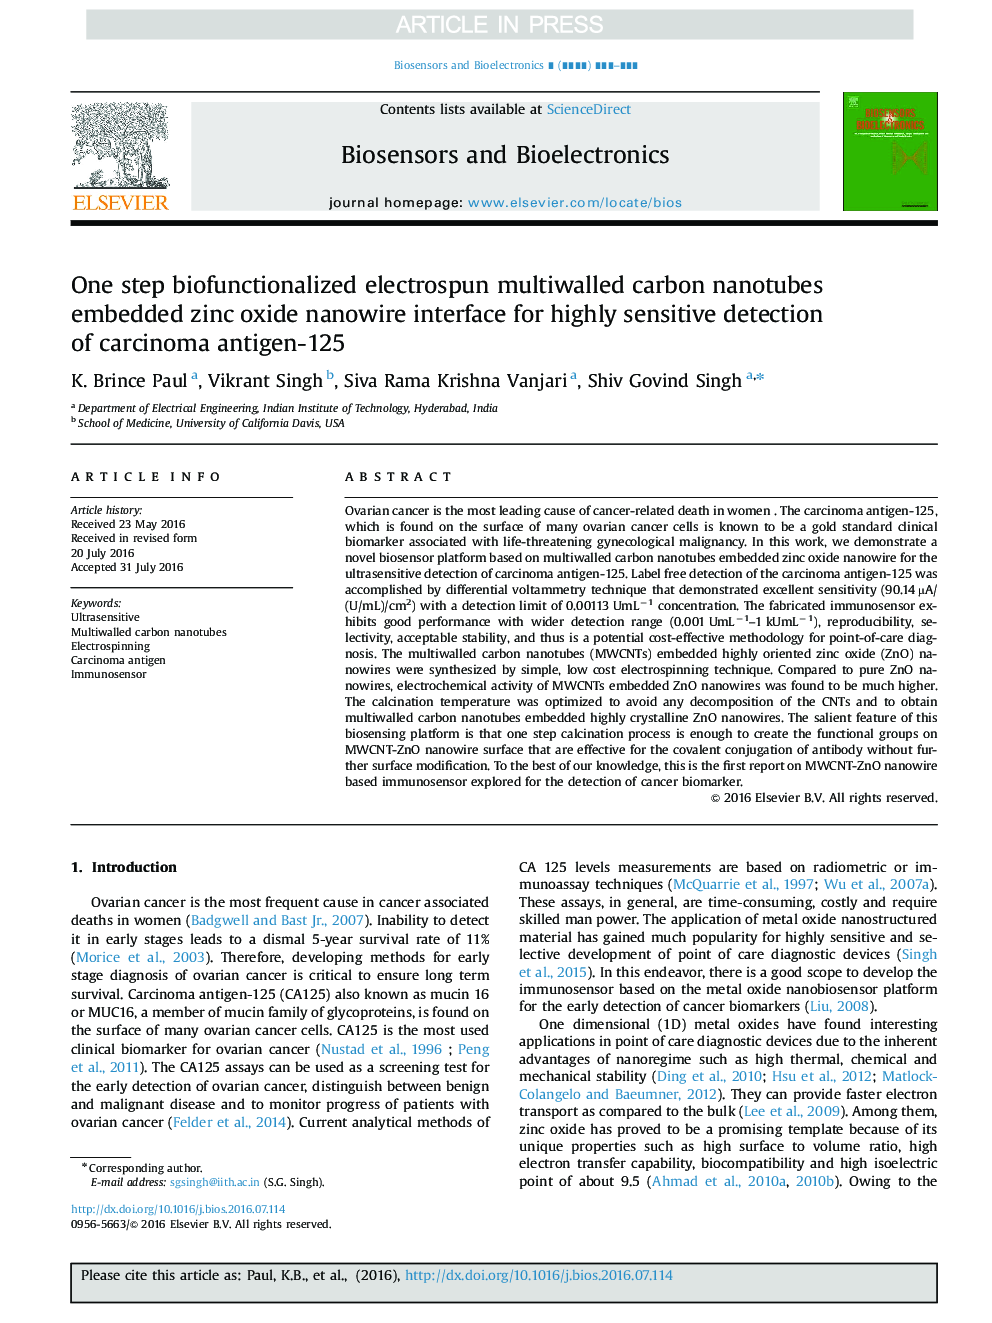 One step biofunctionalized electrospun multiwalled carbon nanotubes embedded zinc oxide nanowire interface for highly sensitive detection of carcinoma antigen-125